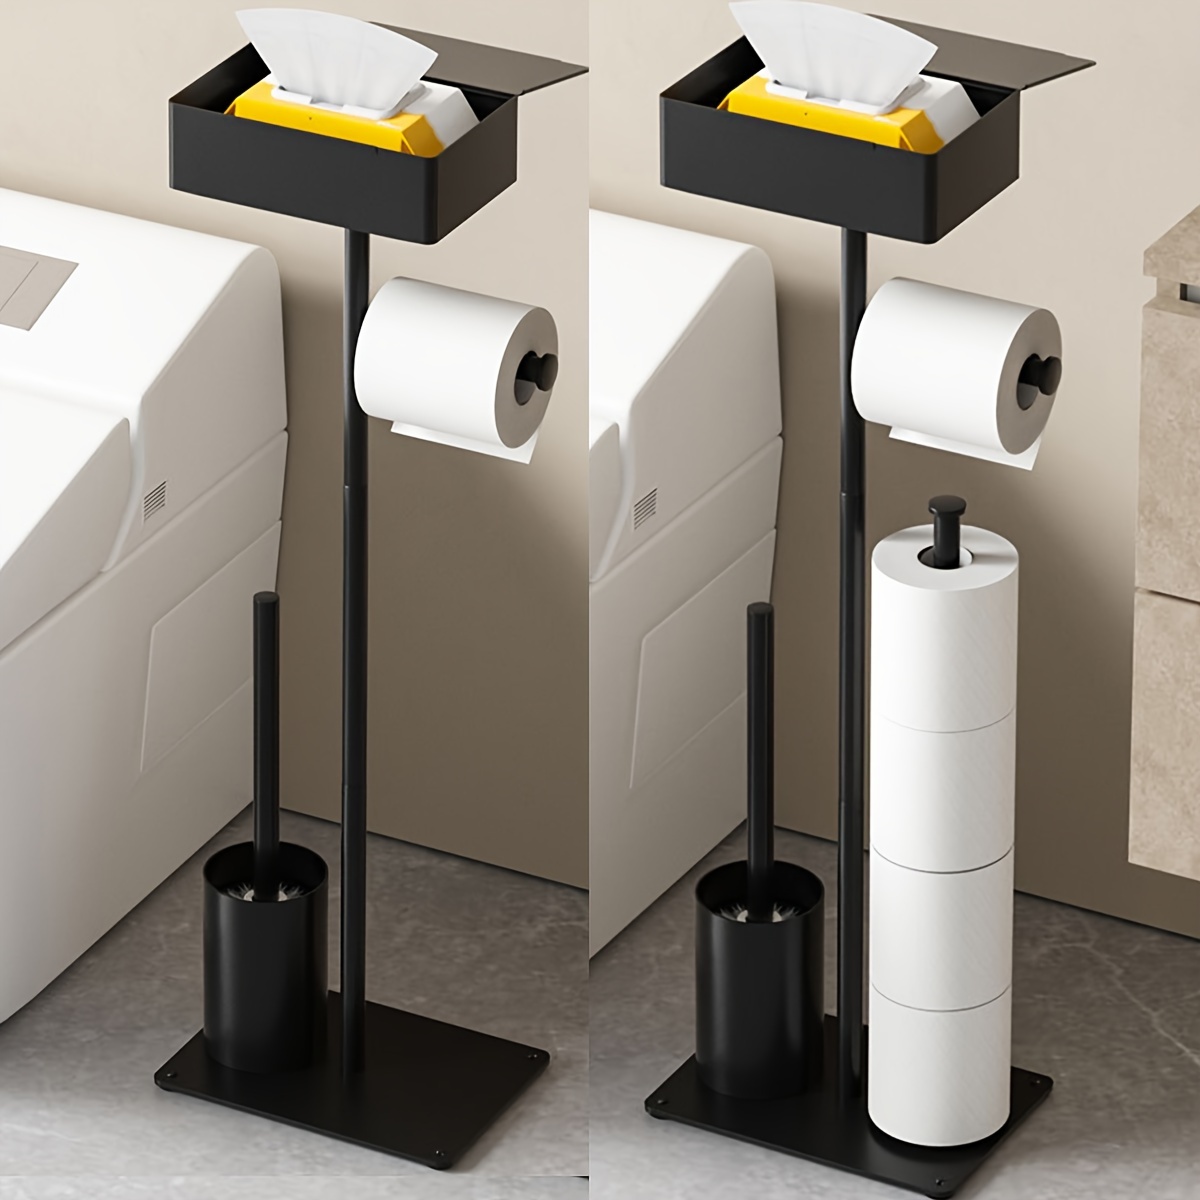 

1pc Vertical Tissue Holder With Toilet Brush: Freestanding Bathroom Storage And Organization - Plastic, Rectangular Design